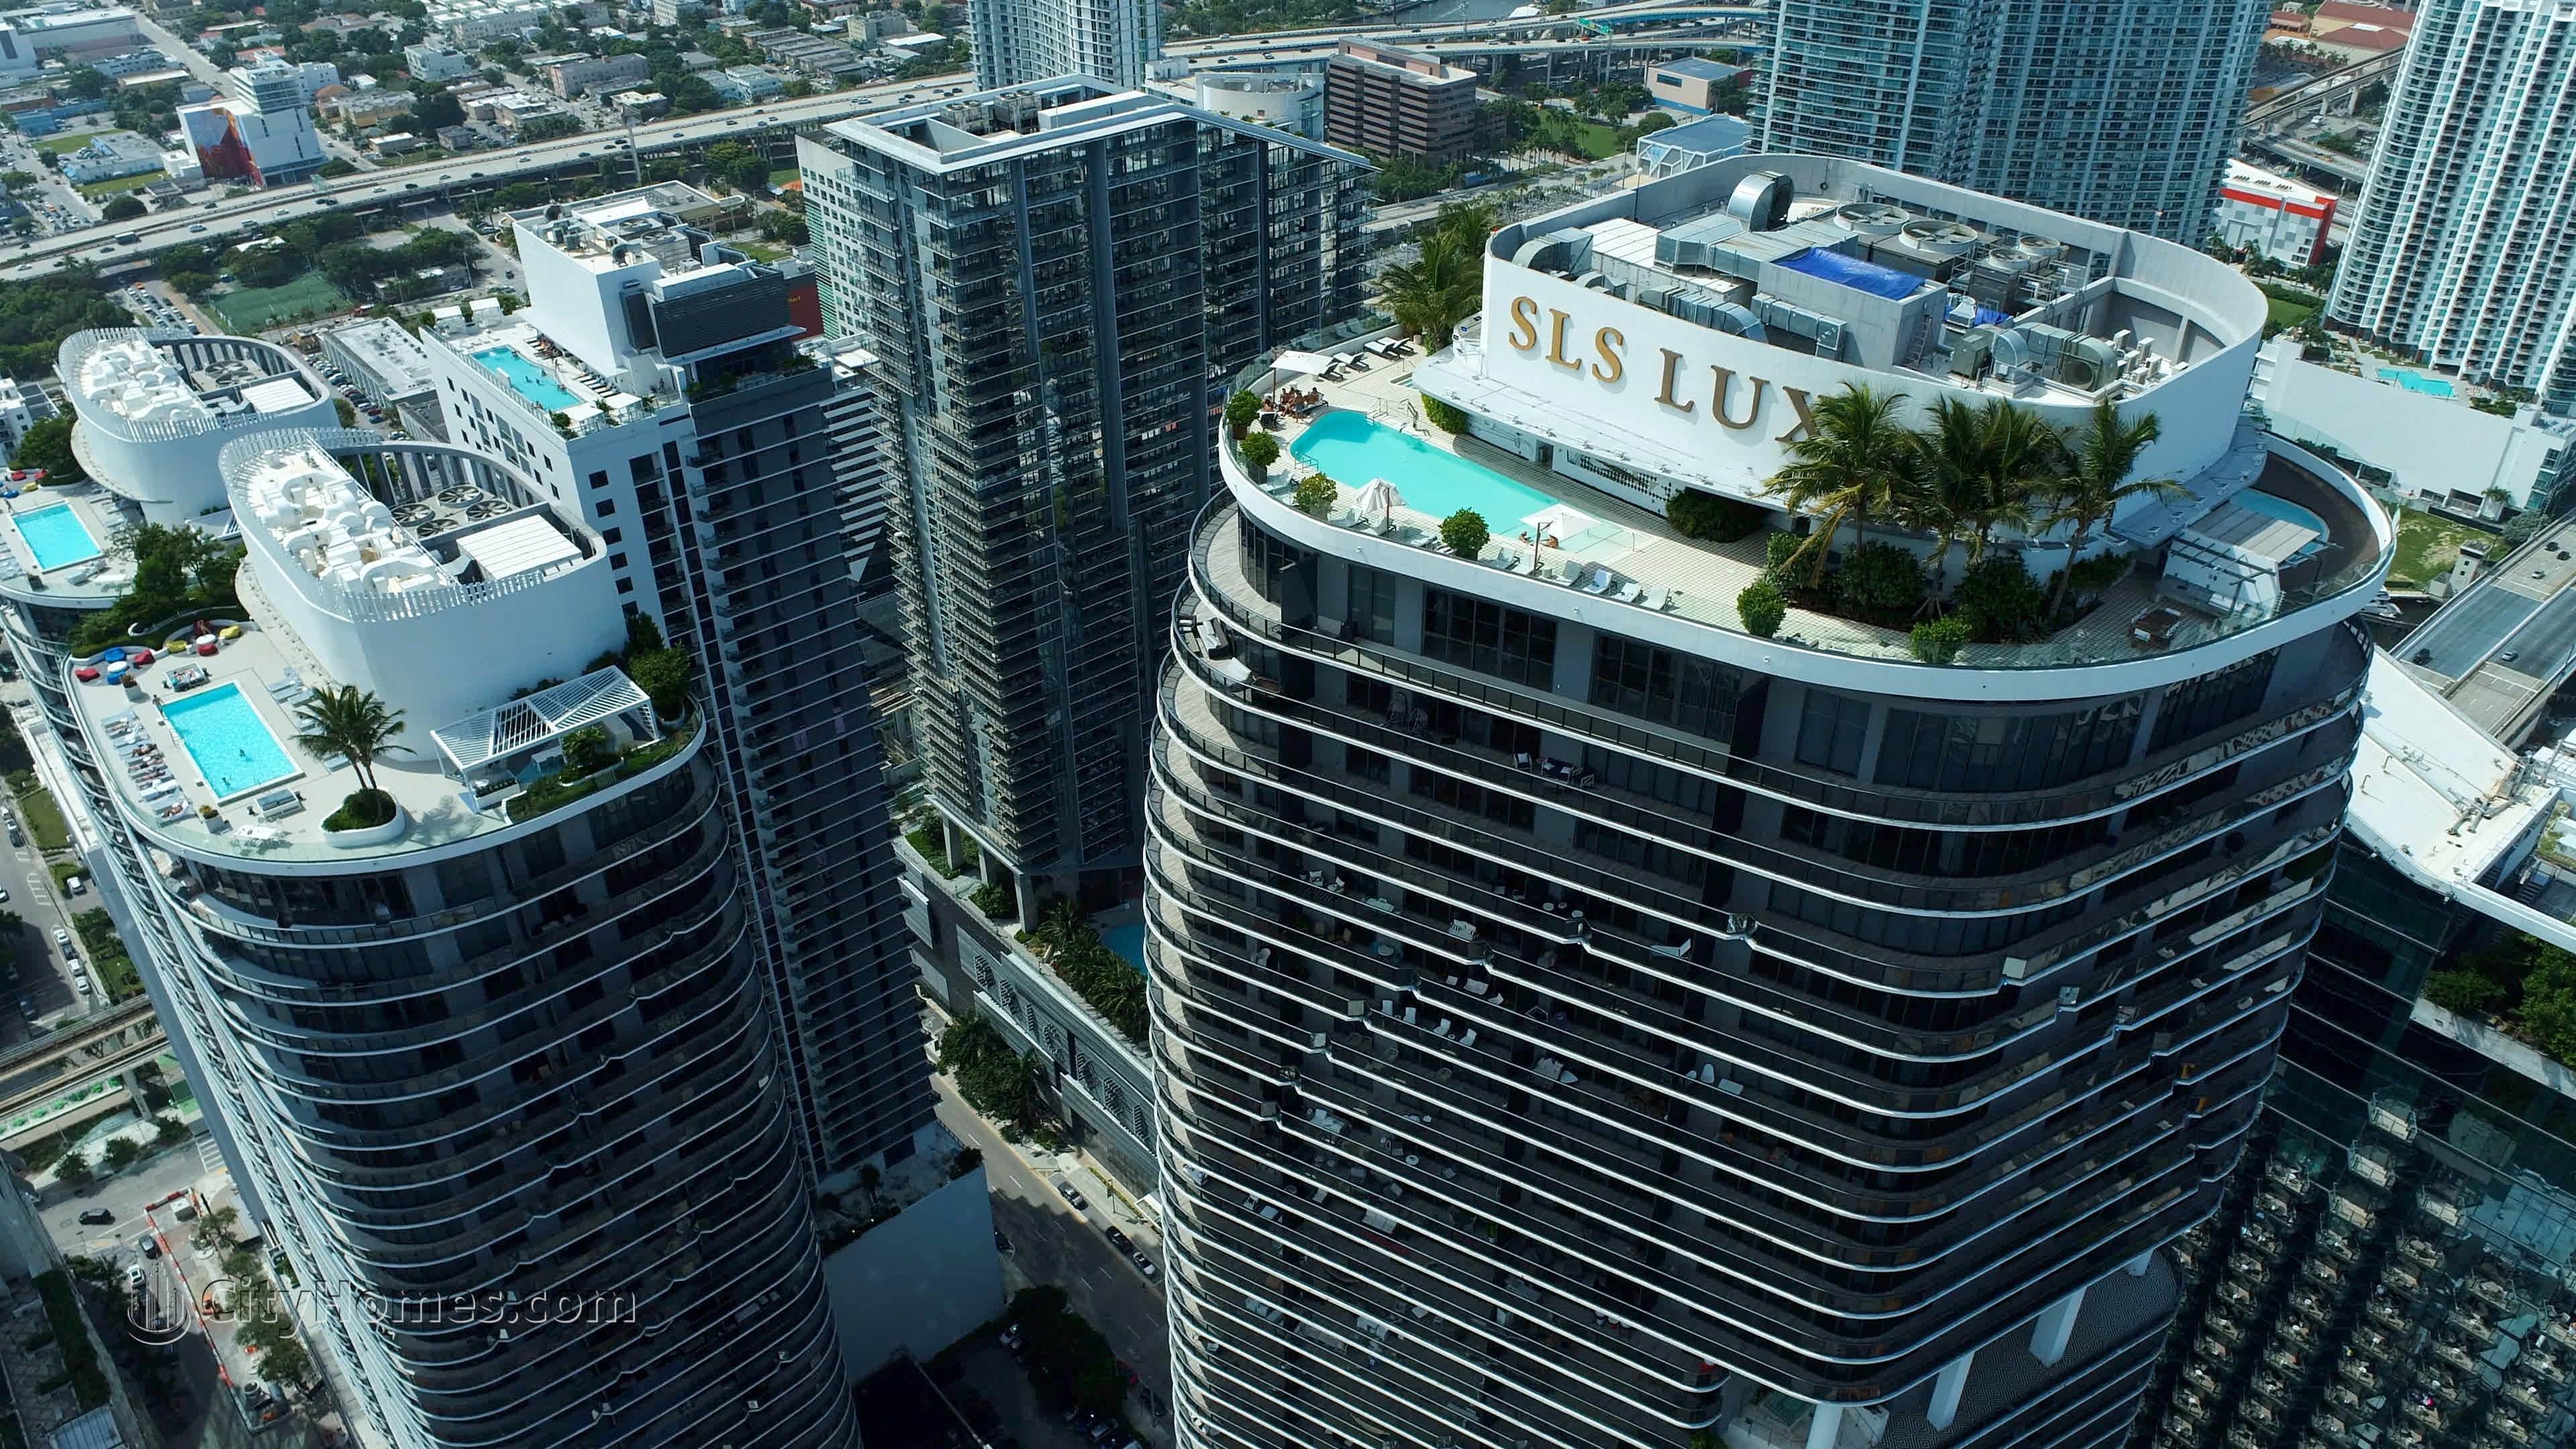 3. SLS Lux Gebäude bei 801 S Miami Avenue, Miami, FL 33139